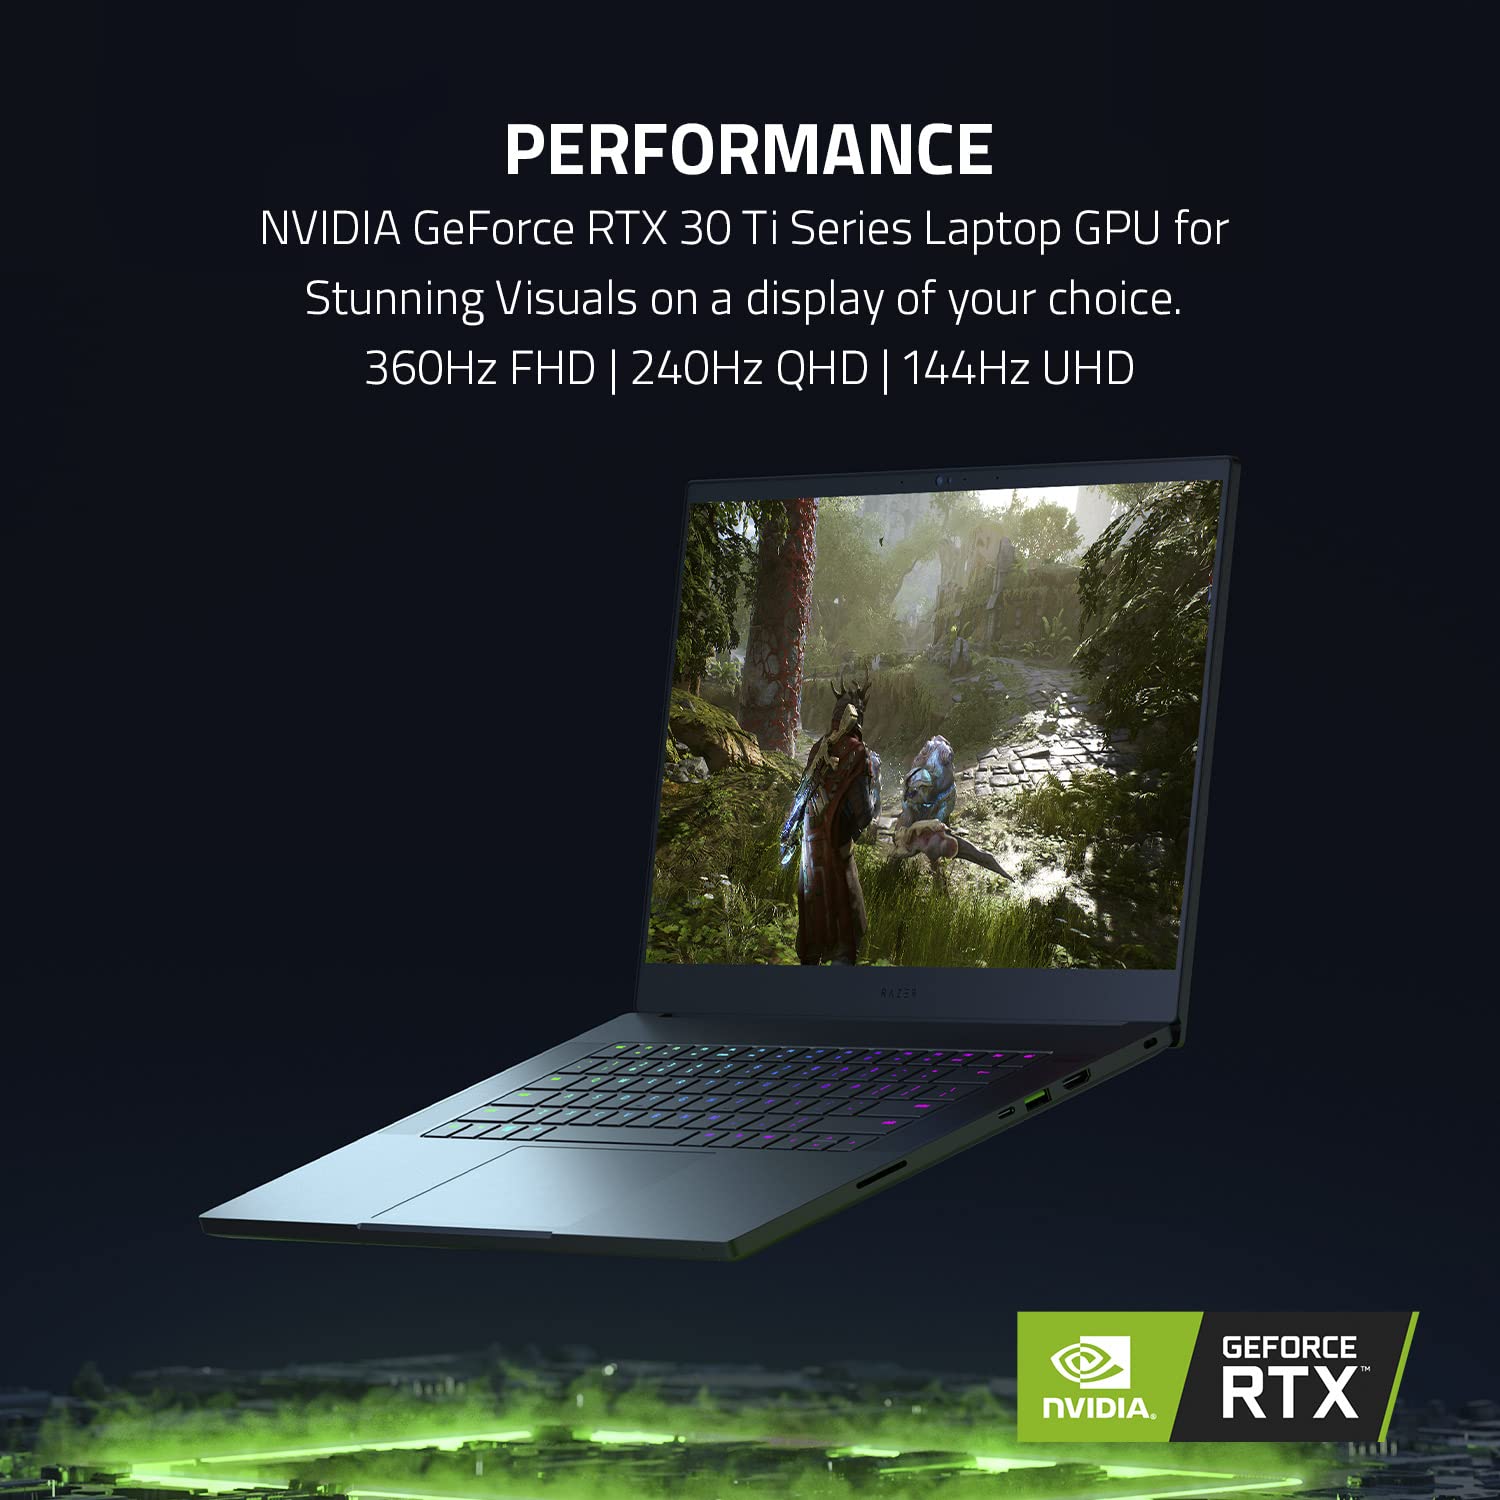 Razer Blade 15 Gaming Laptop: NVIDIA GeForce RTX 3080 Ti - 12th Gen Intel 14-Core i7 CPU - 15.6” FHD 360Hz - 32GB DDR5 RAM, 1TB PCIe SSD - Windows 11 - CNC Aluminum - Chroma RGB - Thunderbolt 4